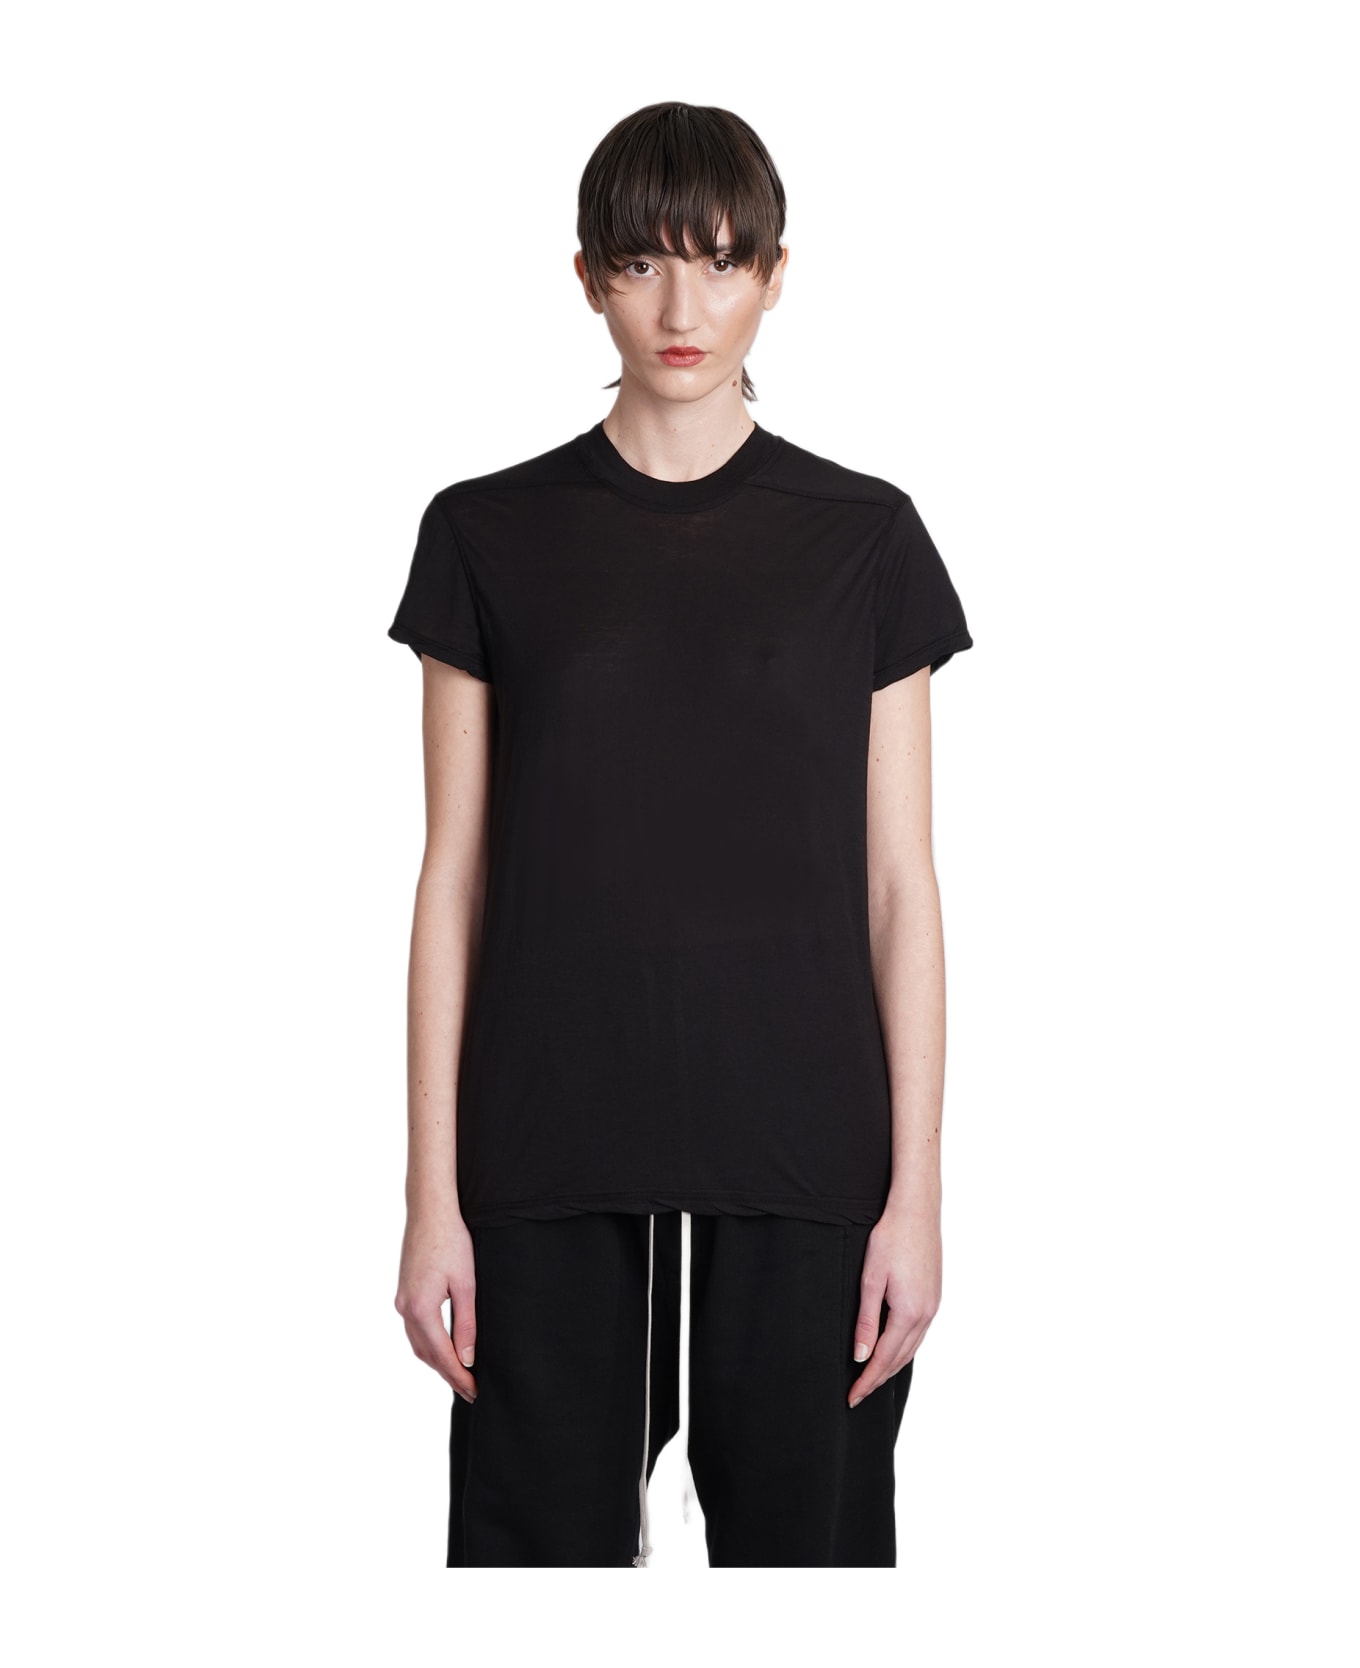 DRKSHDW Small Level T T-shirt In Black Cotton - black